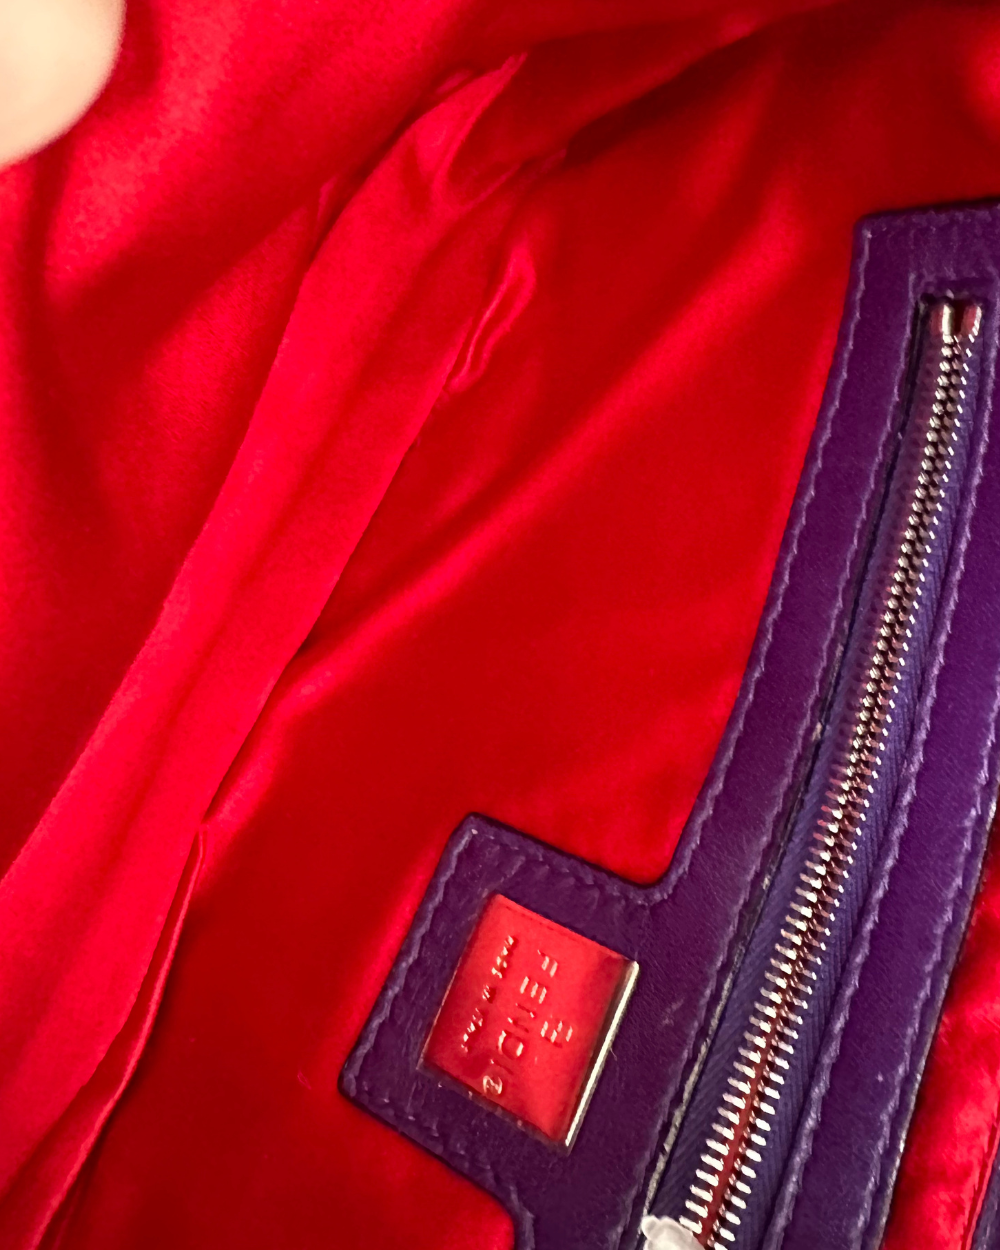 Fendi Purple Leather Baguette Bag